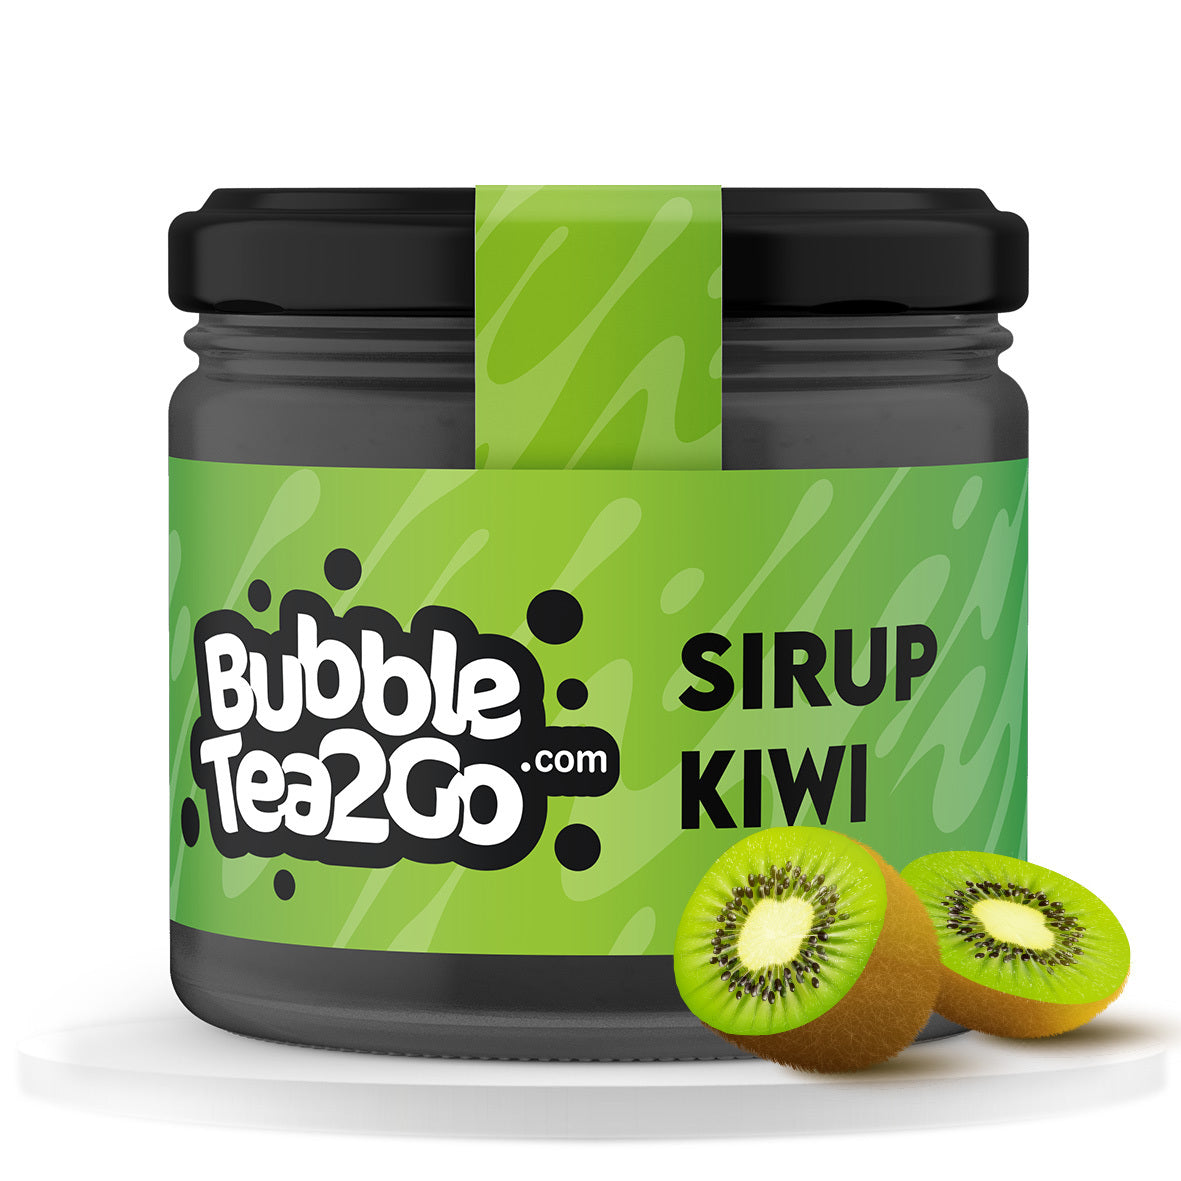 Sirop - Kiwi 2 portions (50g)